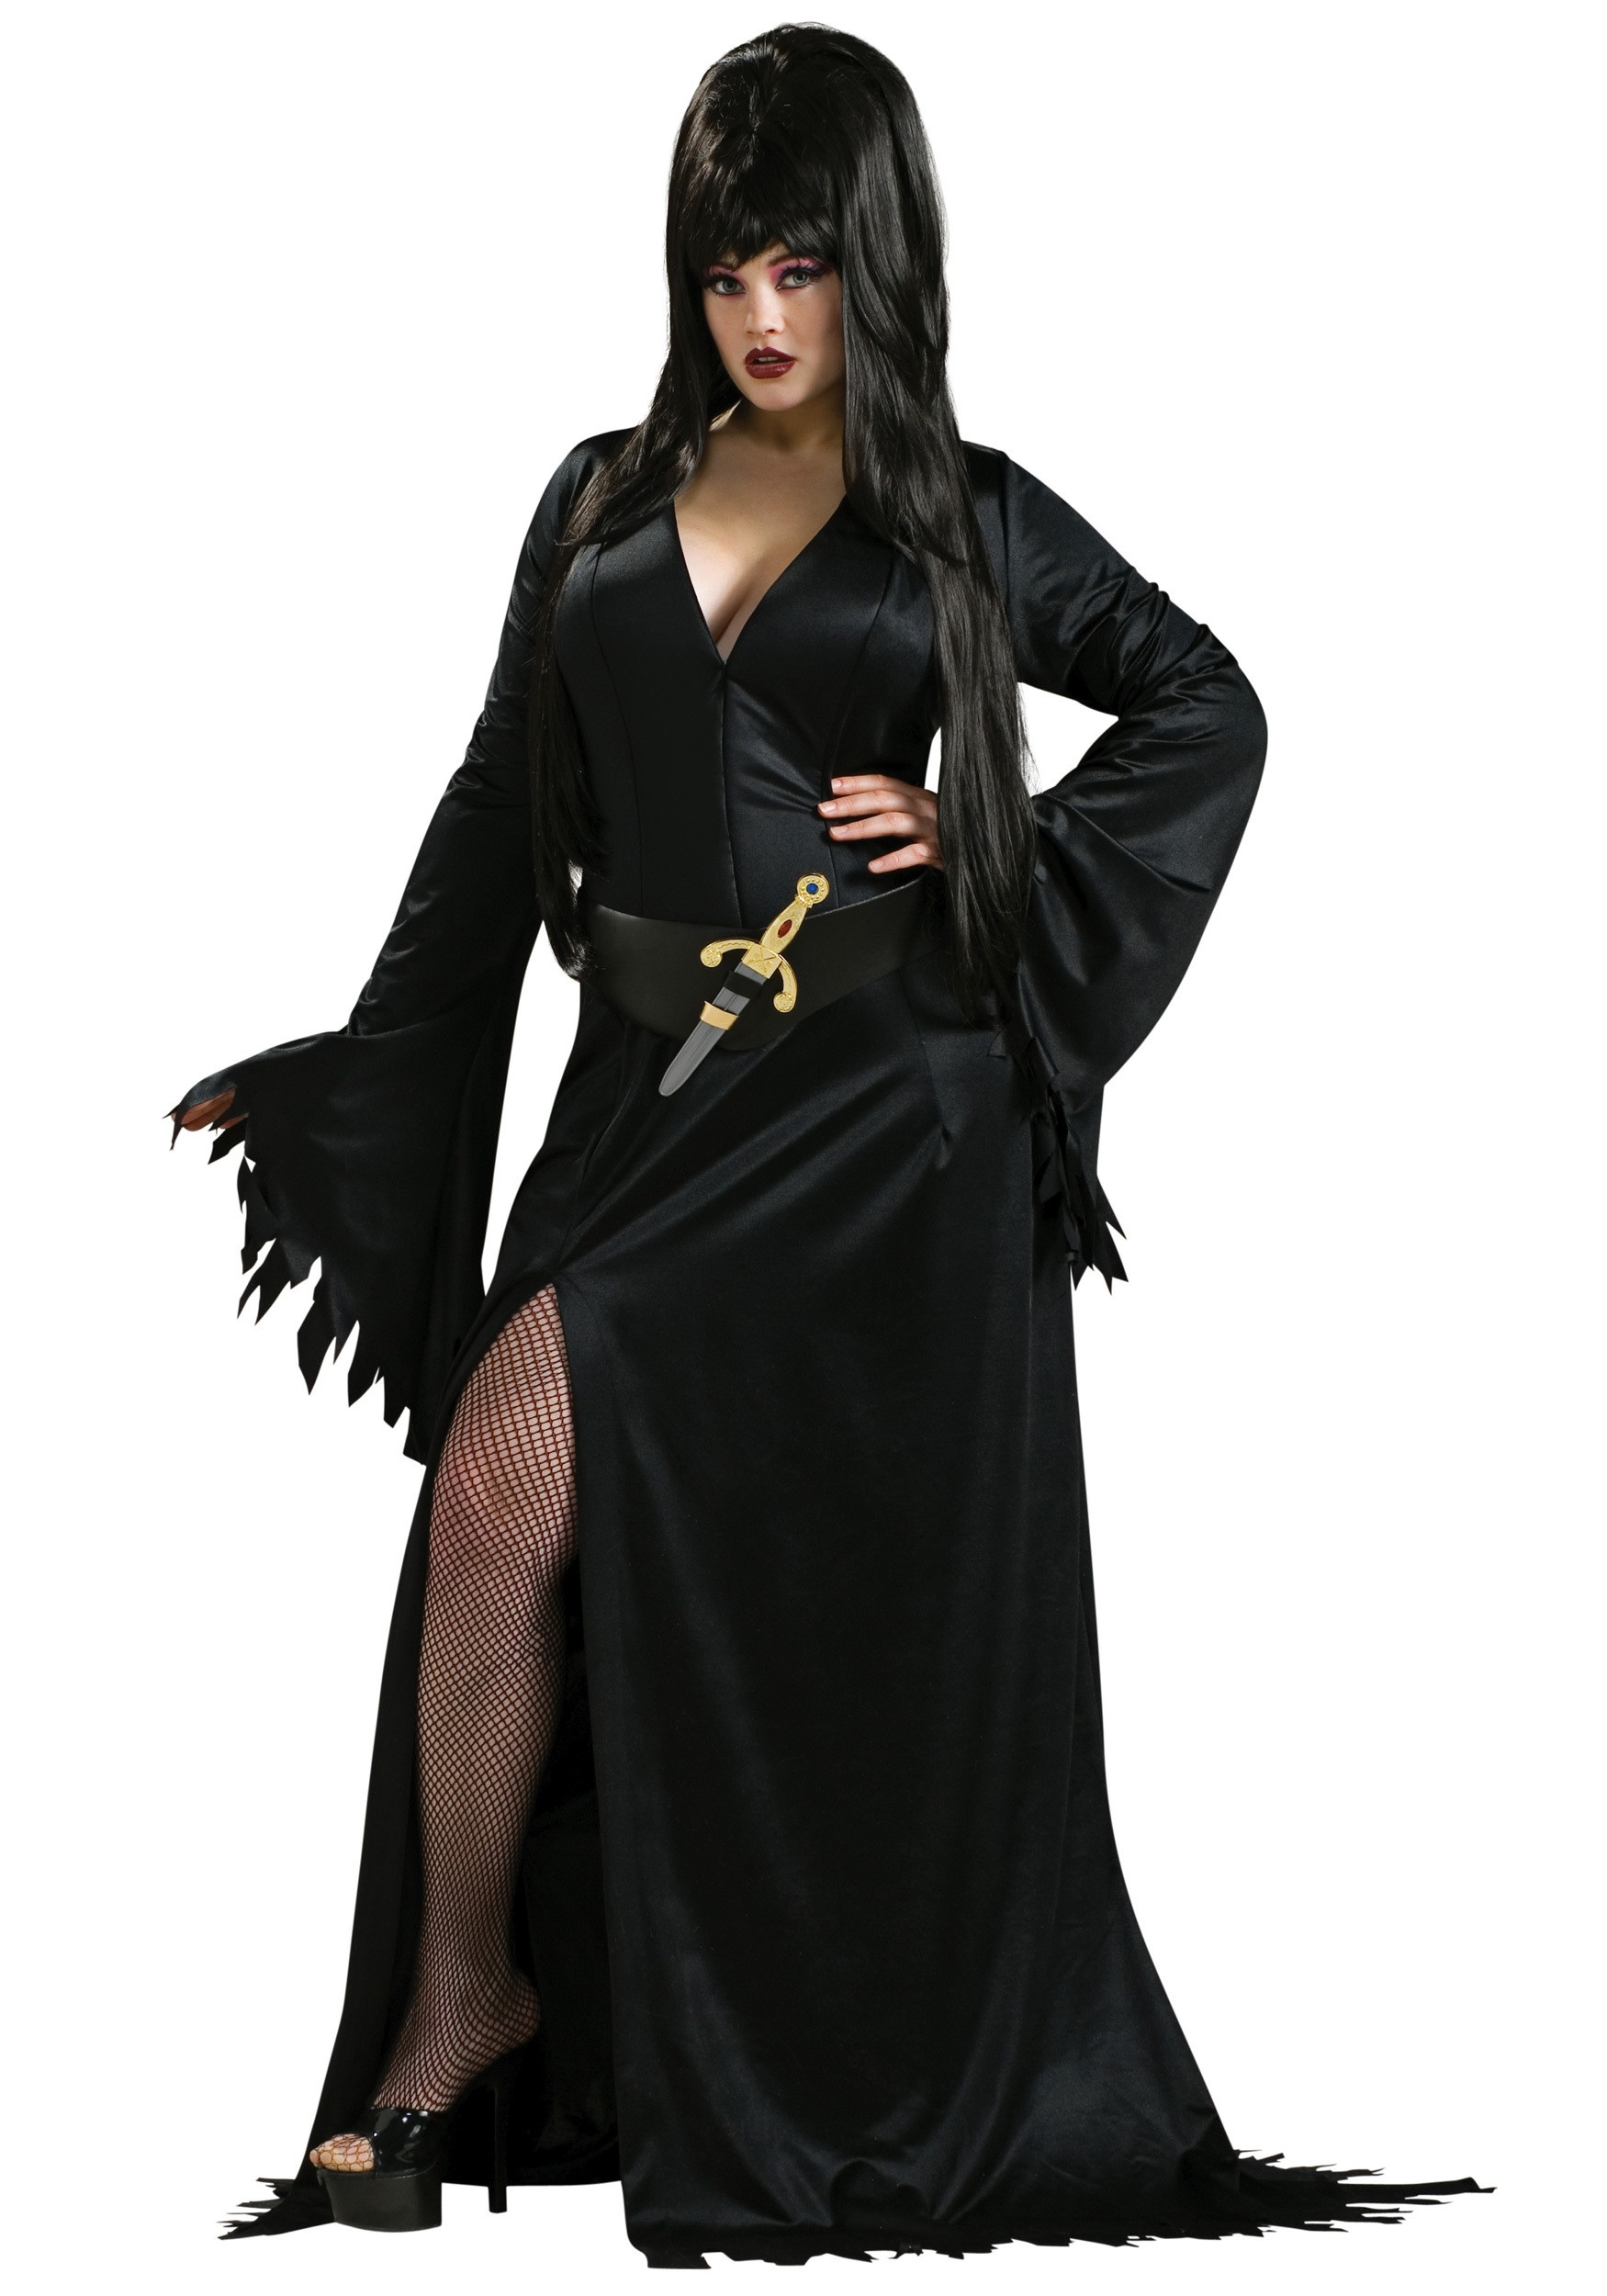 Best ideas about Elvira Costume DIY
. Save or Pin Plus Size Elvira Costume Now.